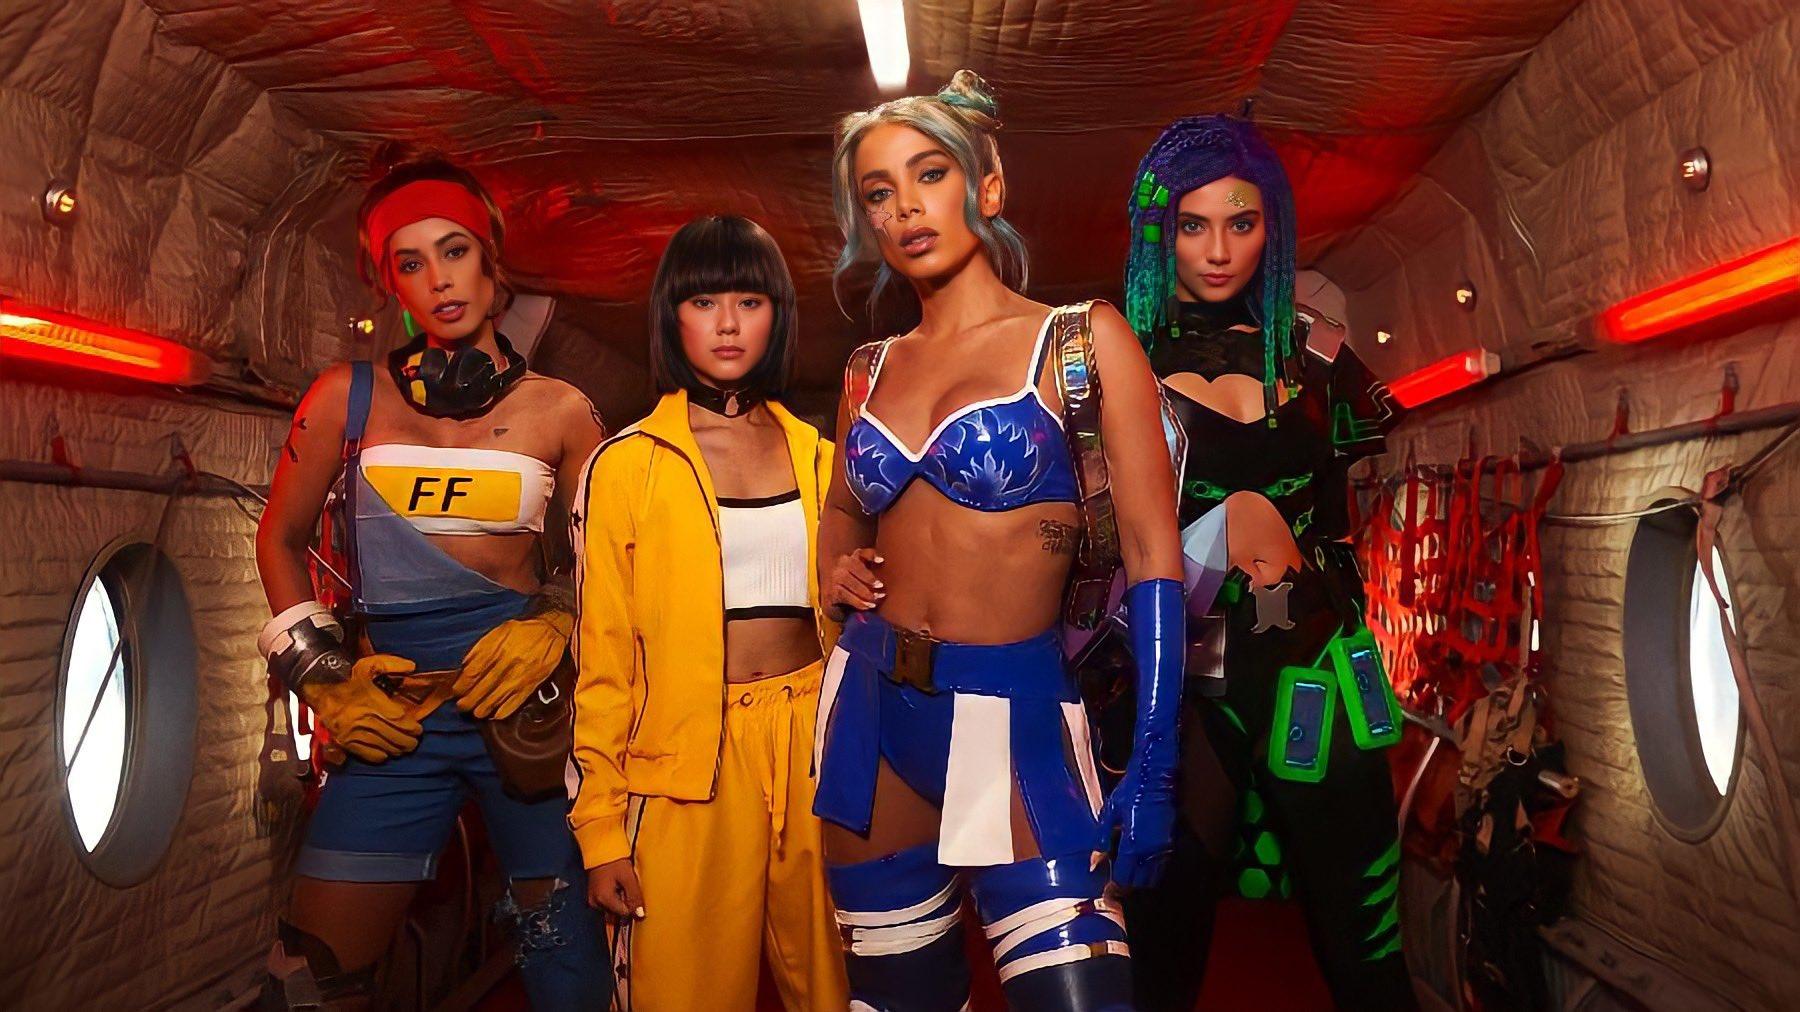 Anitta y Free Fire lanzan vista previa del video musical "Tropa"; saber todo